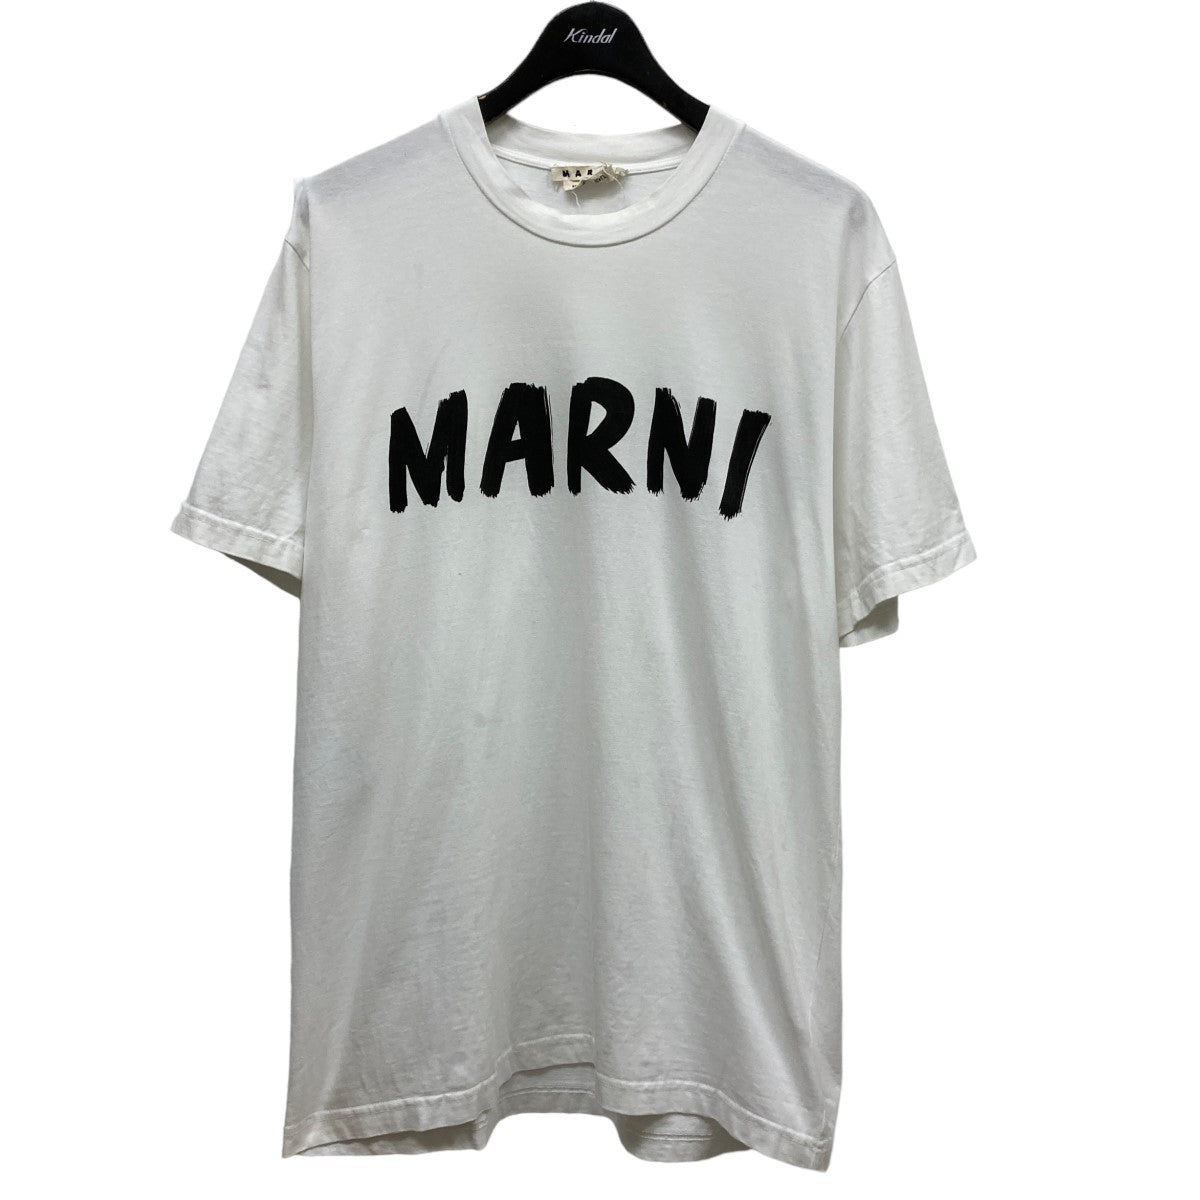 MARNI(マルニ) ロゴプリントTシャツHUMU0175P0 HUMU0175P0 ホワイト 